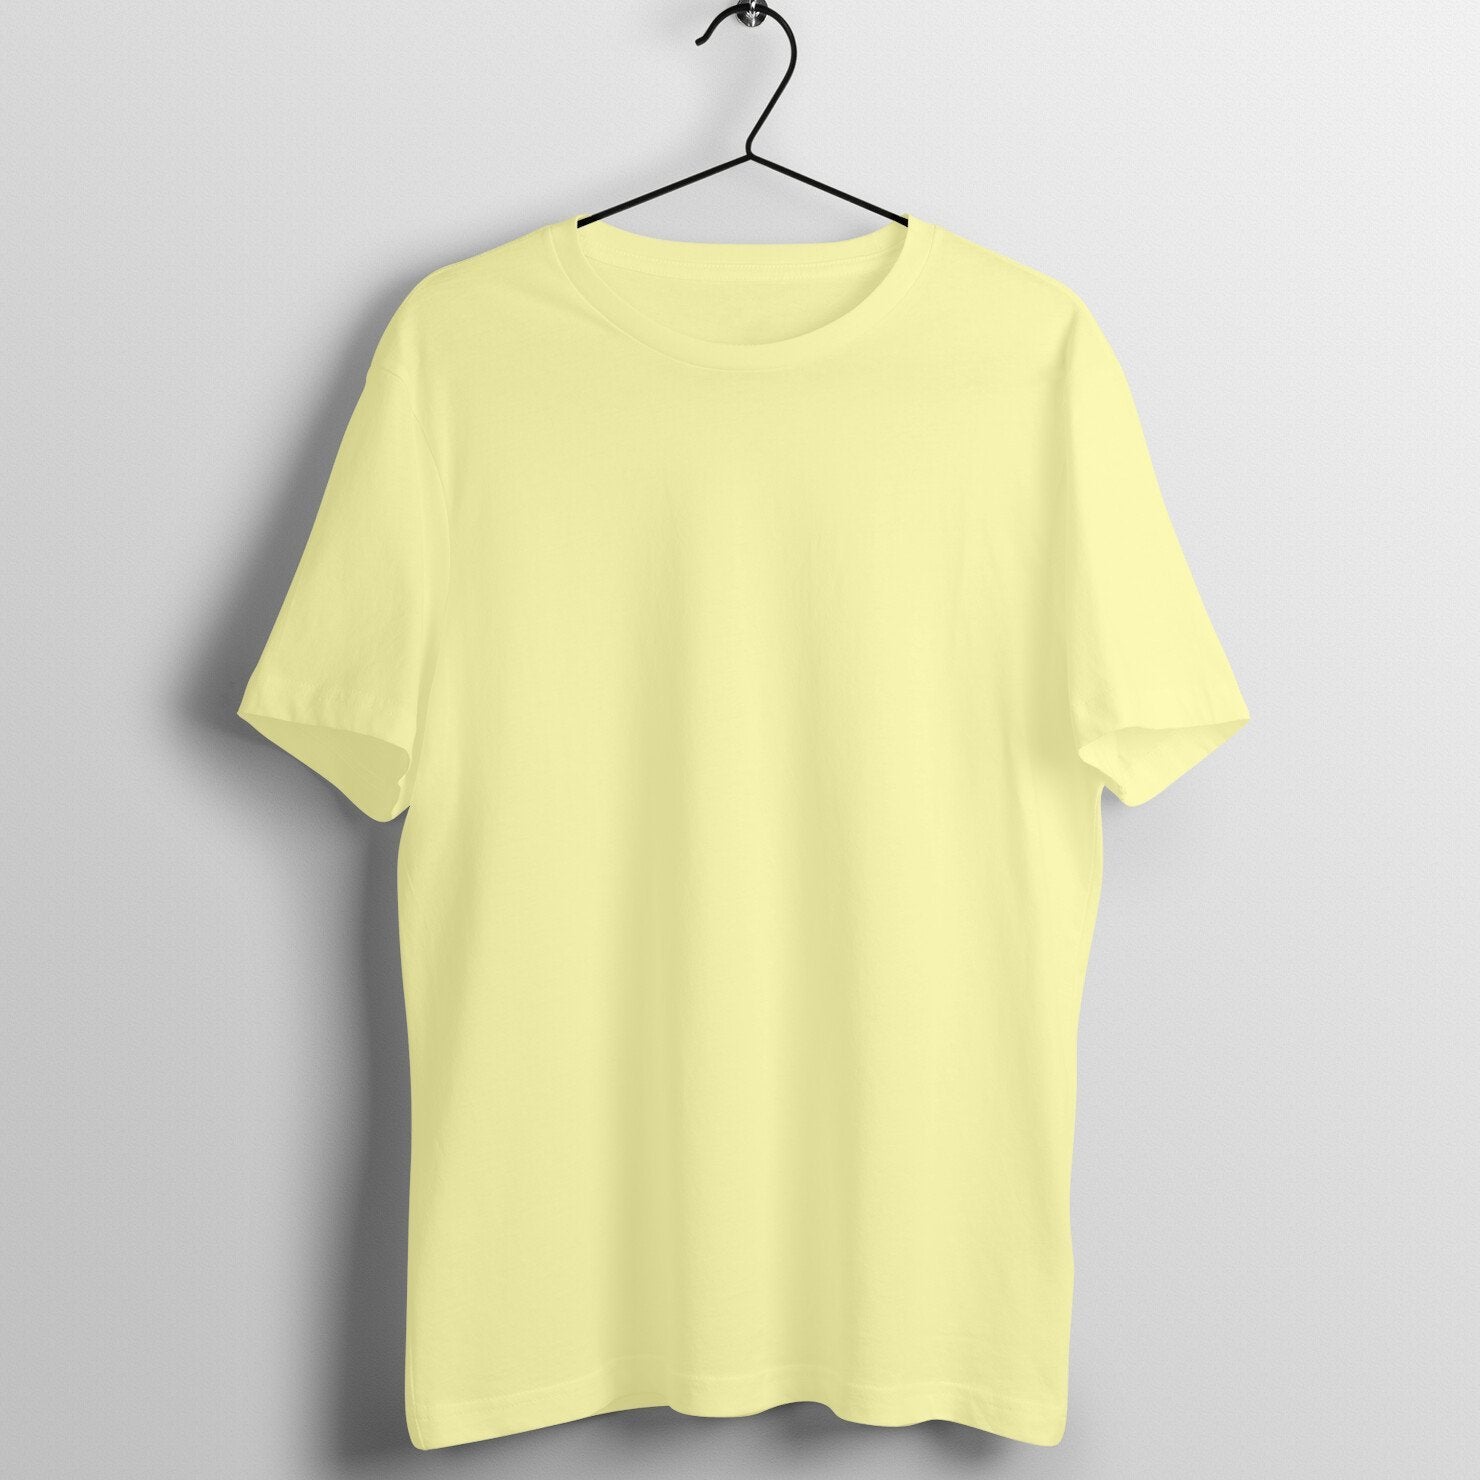 Butter Yellow Half Sleeve T-Shirt - Insane Tees